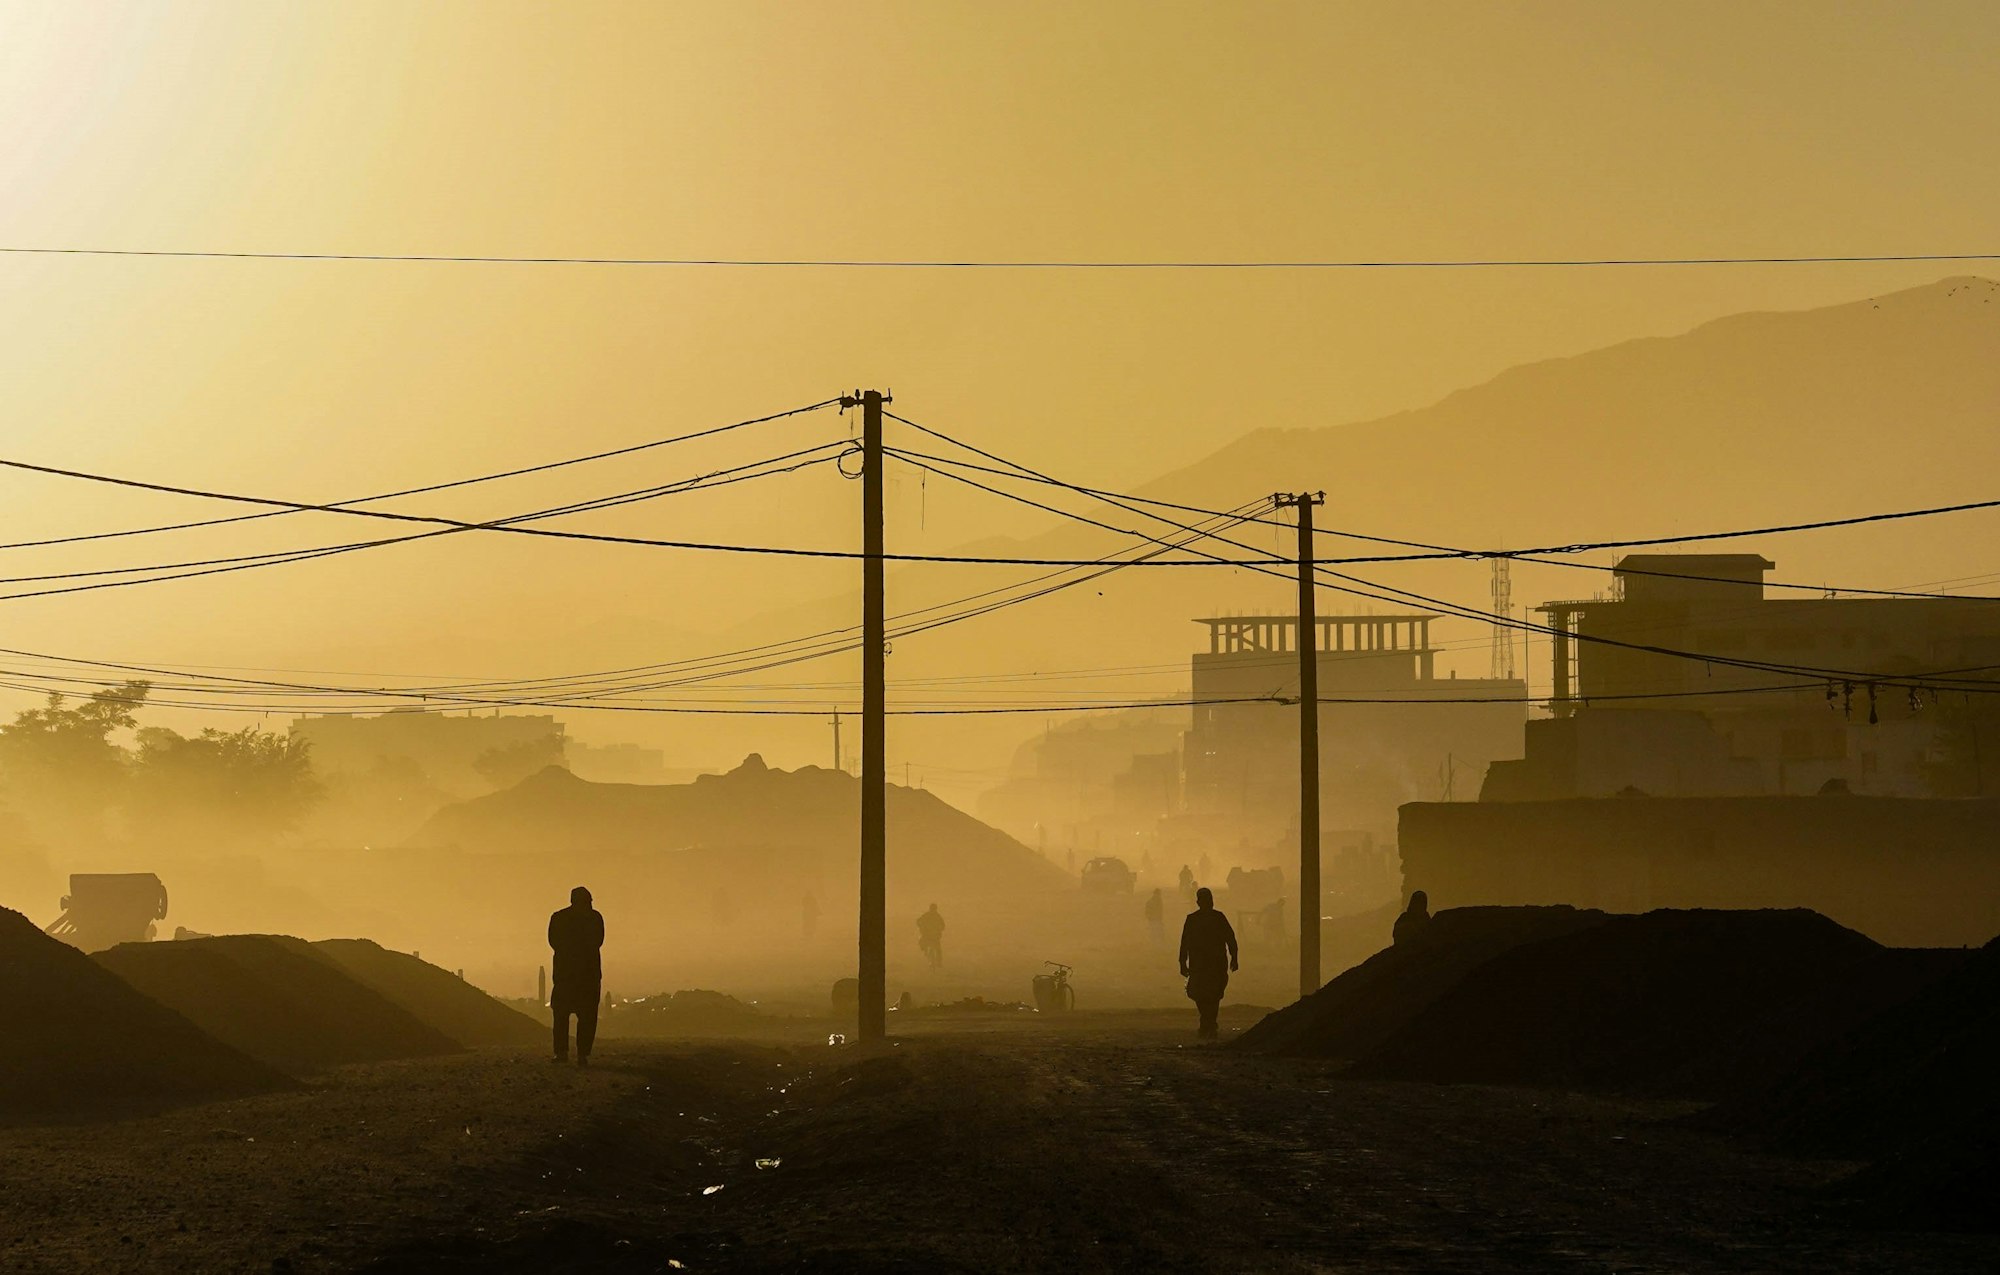 Morning in Kabul, Afghanistan 🇦🇫 

#kabul #afghanistan #morning